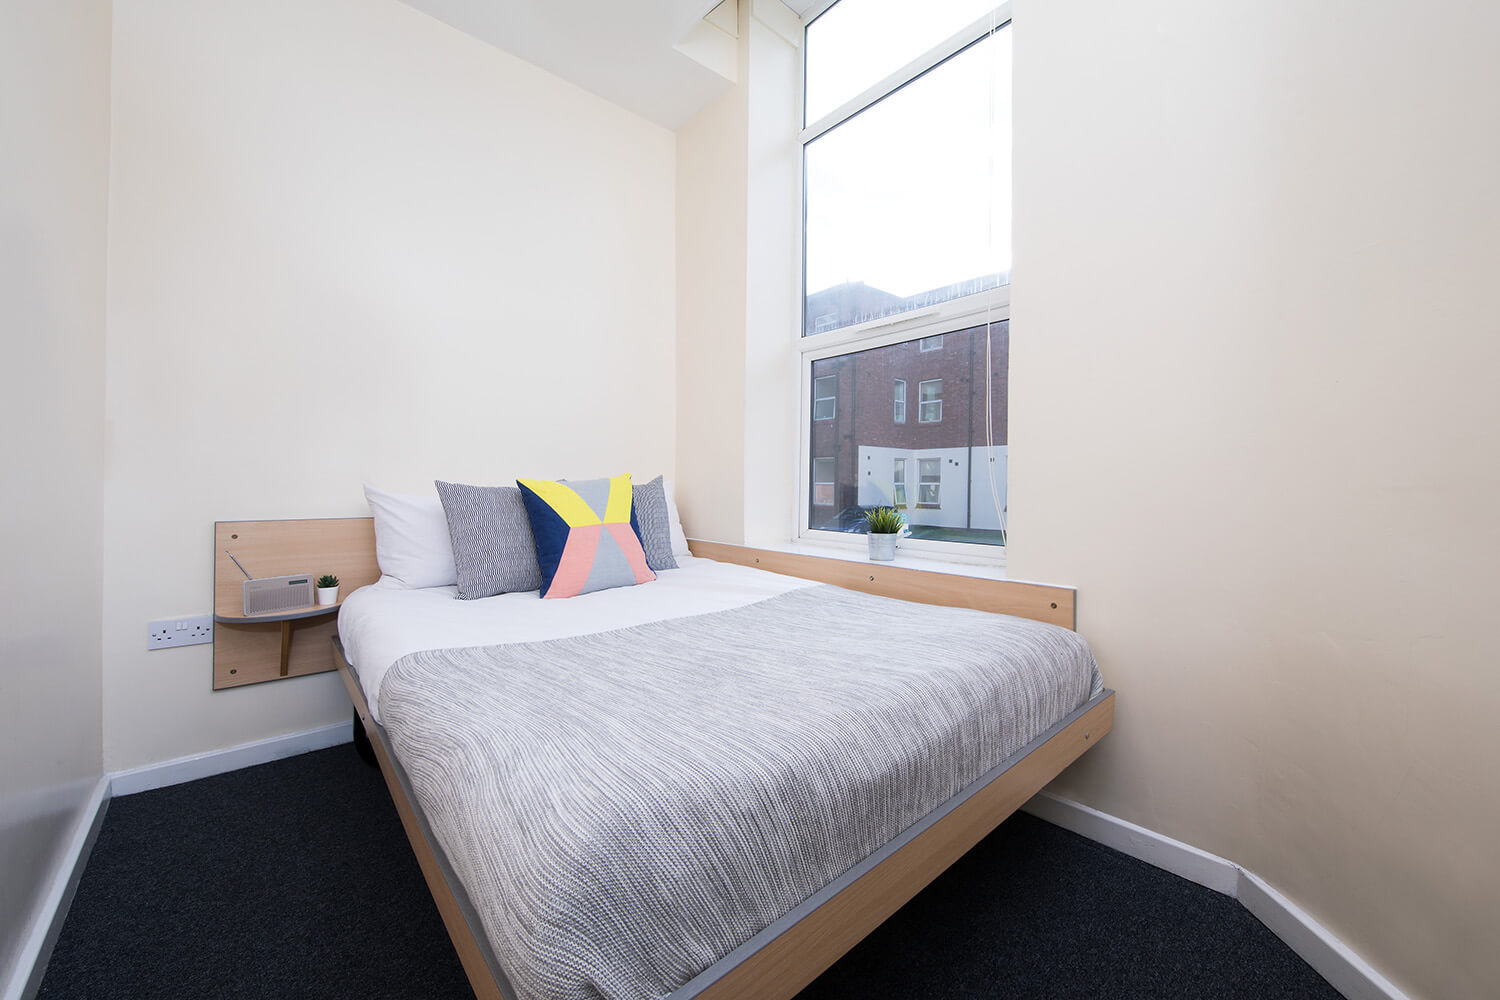 Studio room student accommodation in Liverpool